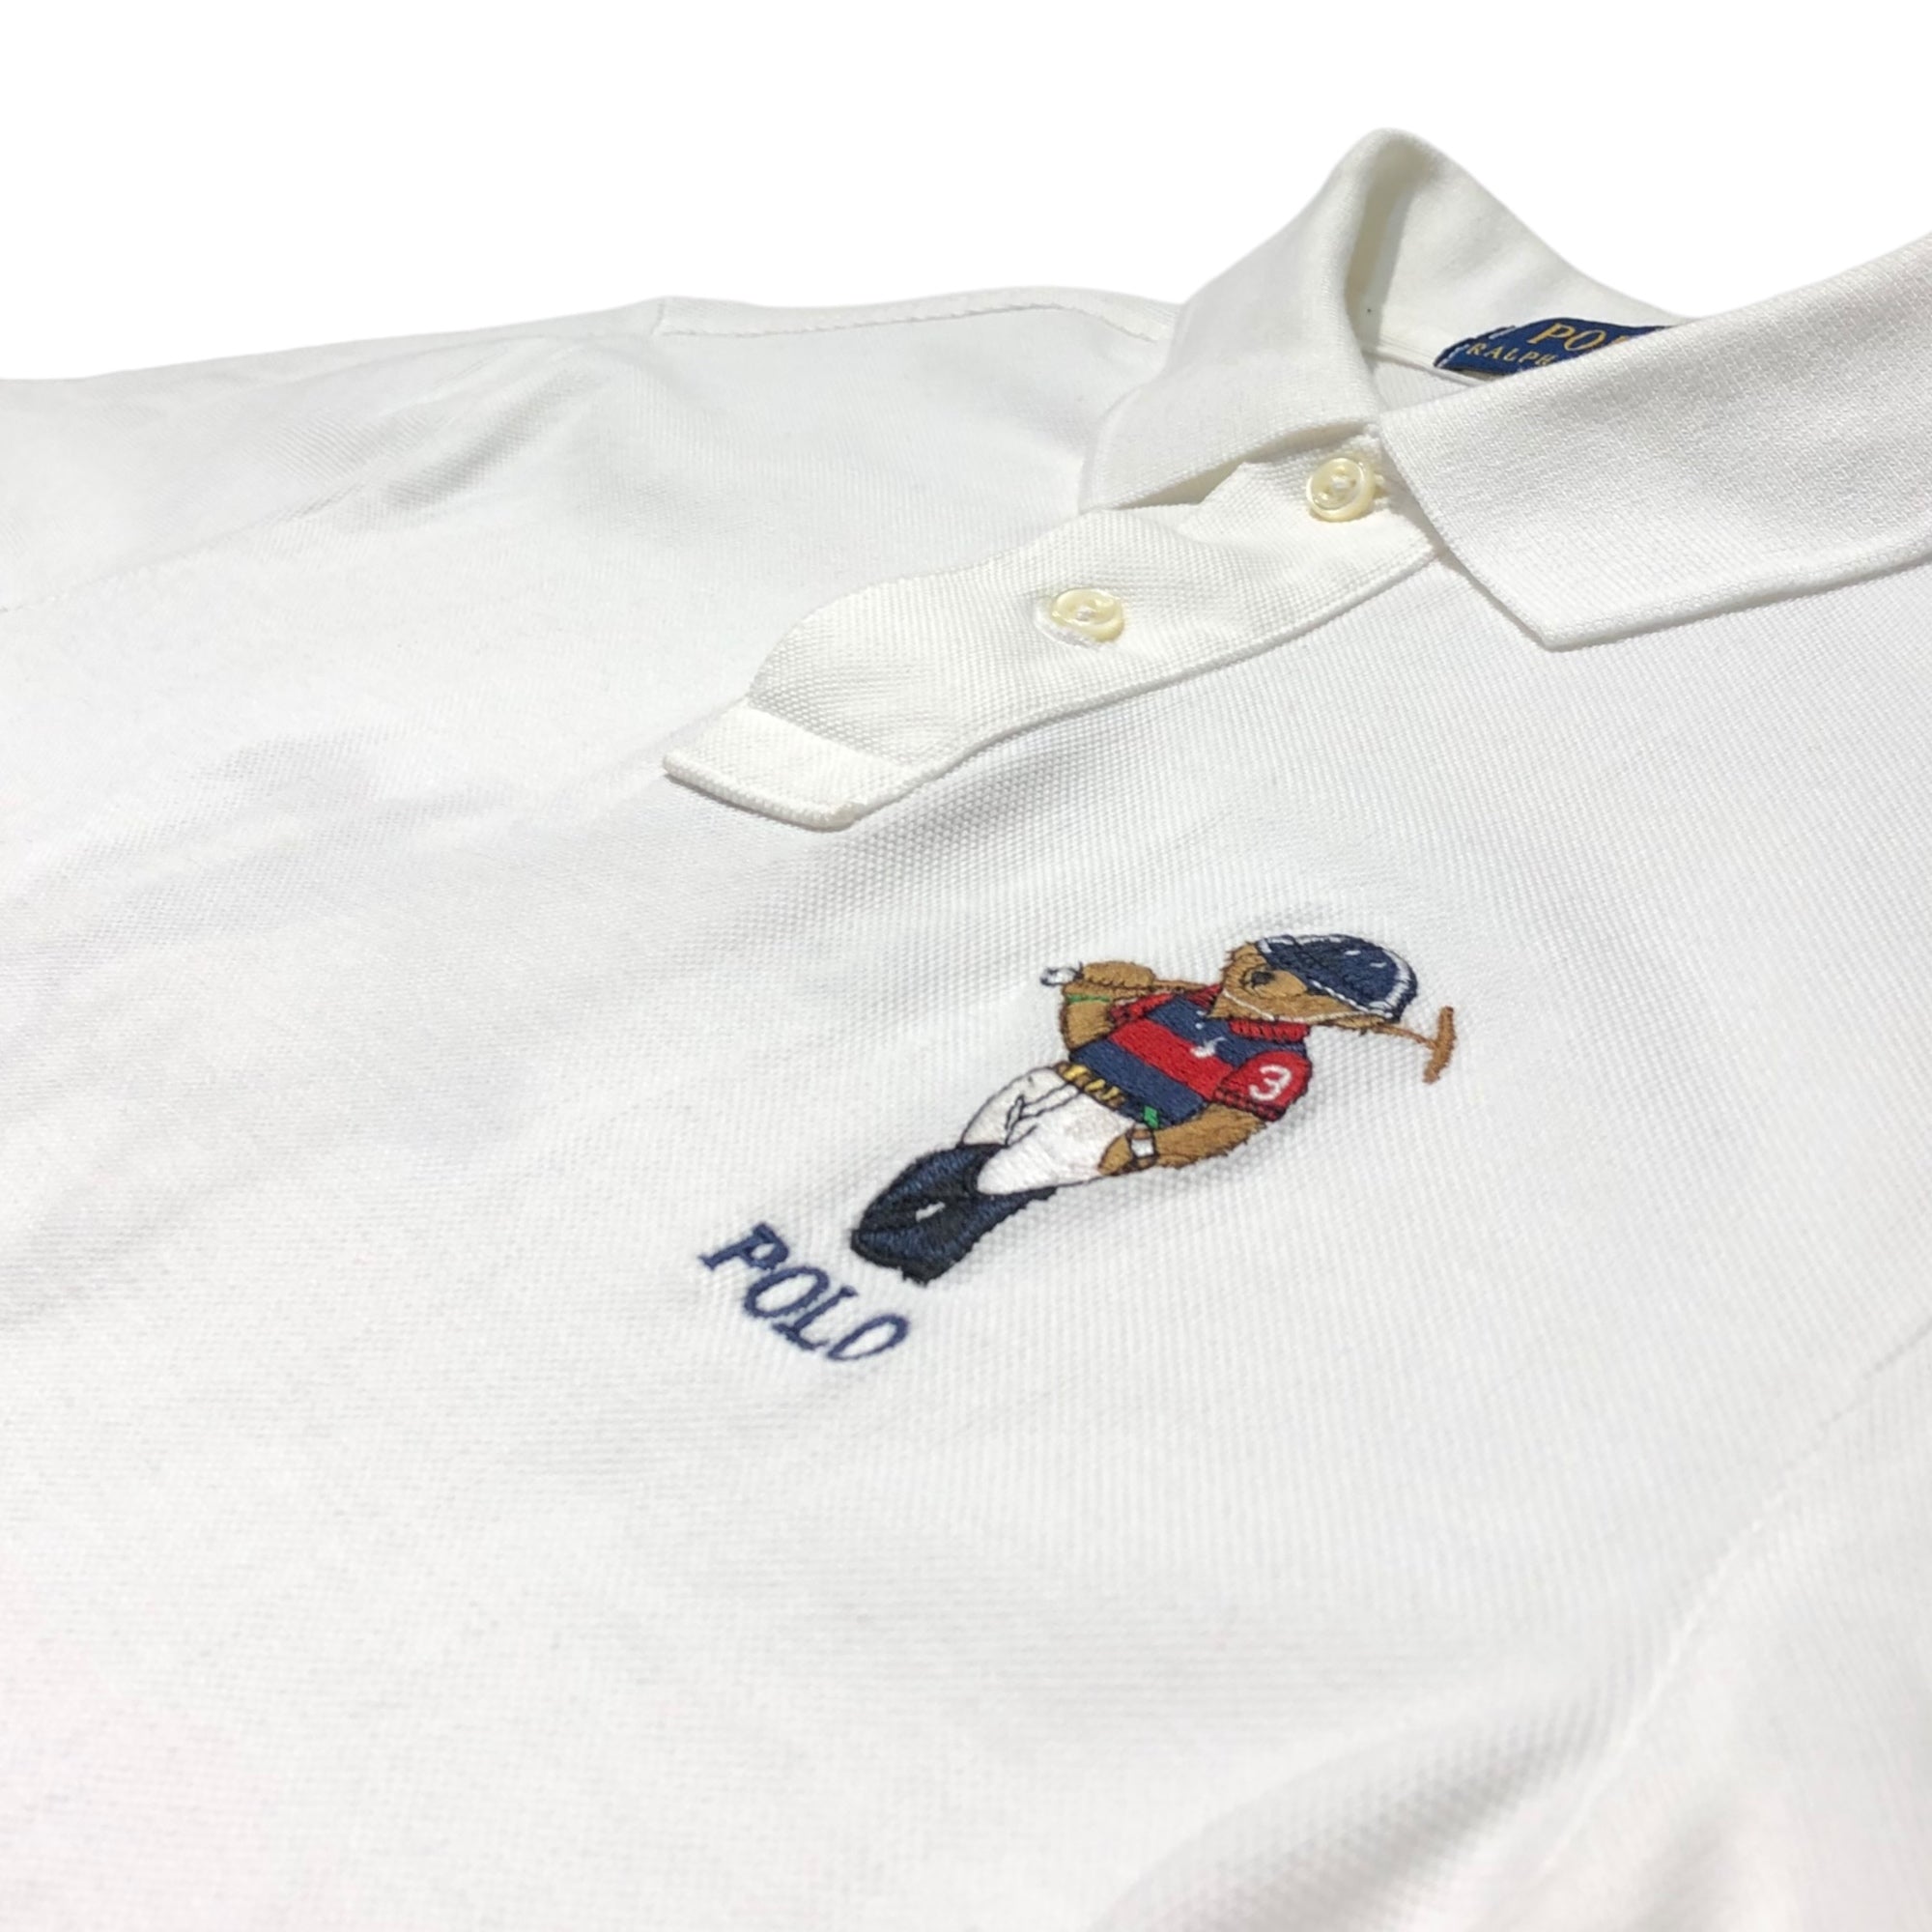 POLO RALPH LAUREN(ポロラルフローレン) polo bear logo embroidery polo shirt ポロ ベア ロゴ 刺繍 半袖 ポロシャツ S ホワイト